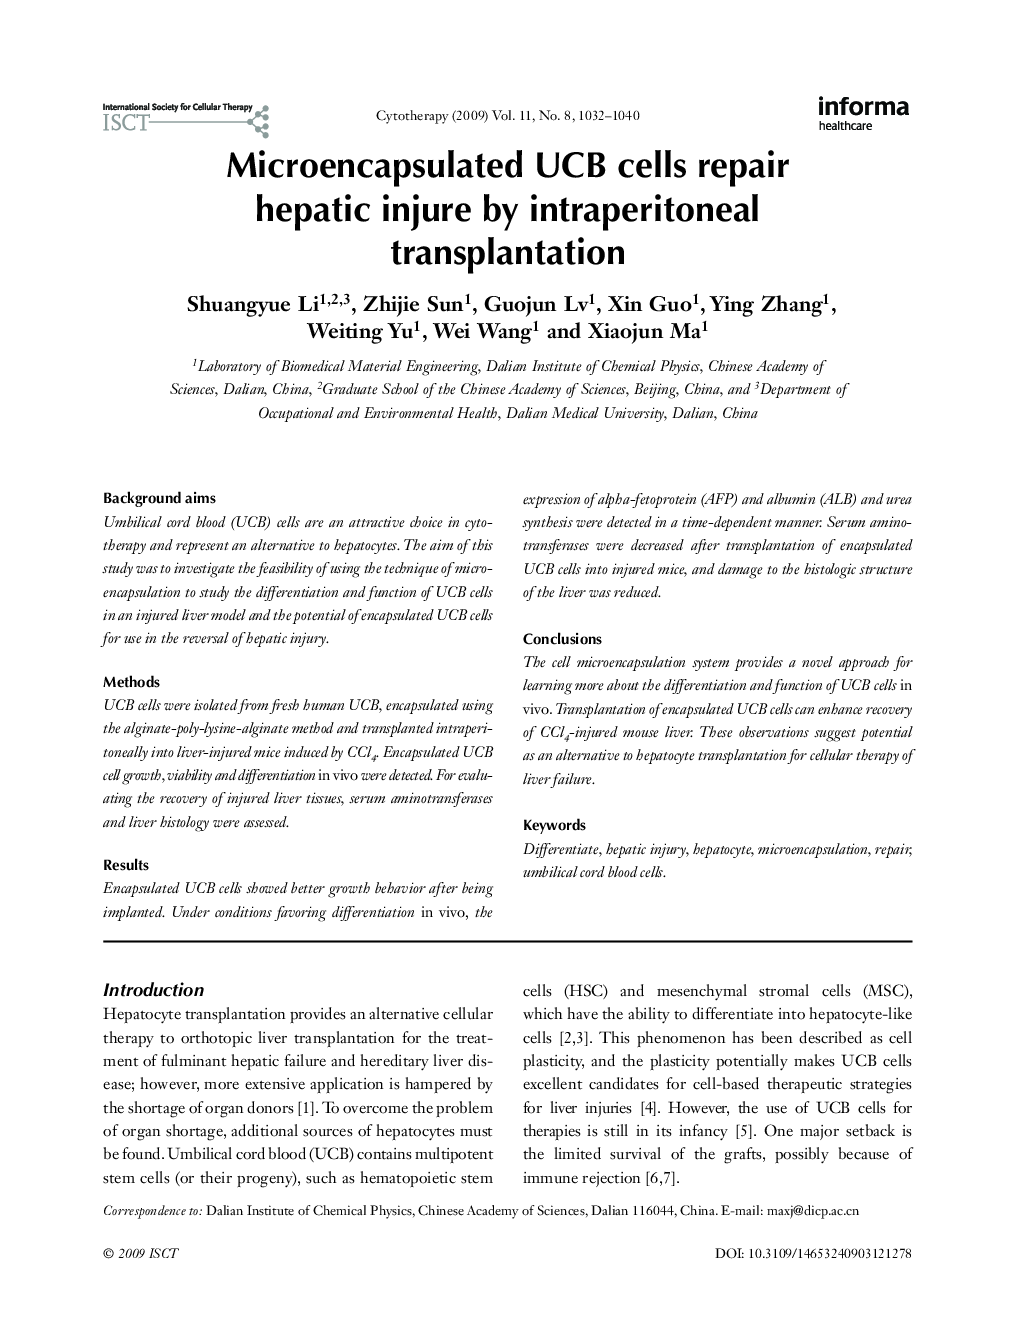 Microencapsulated UCB cells repair hepatic injure by intraperitoneal transplantation